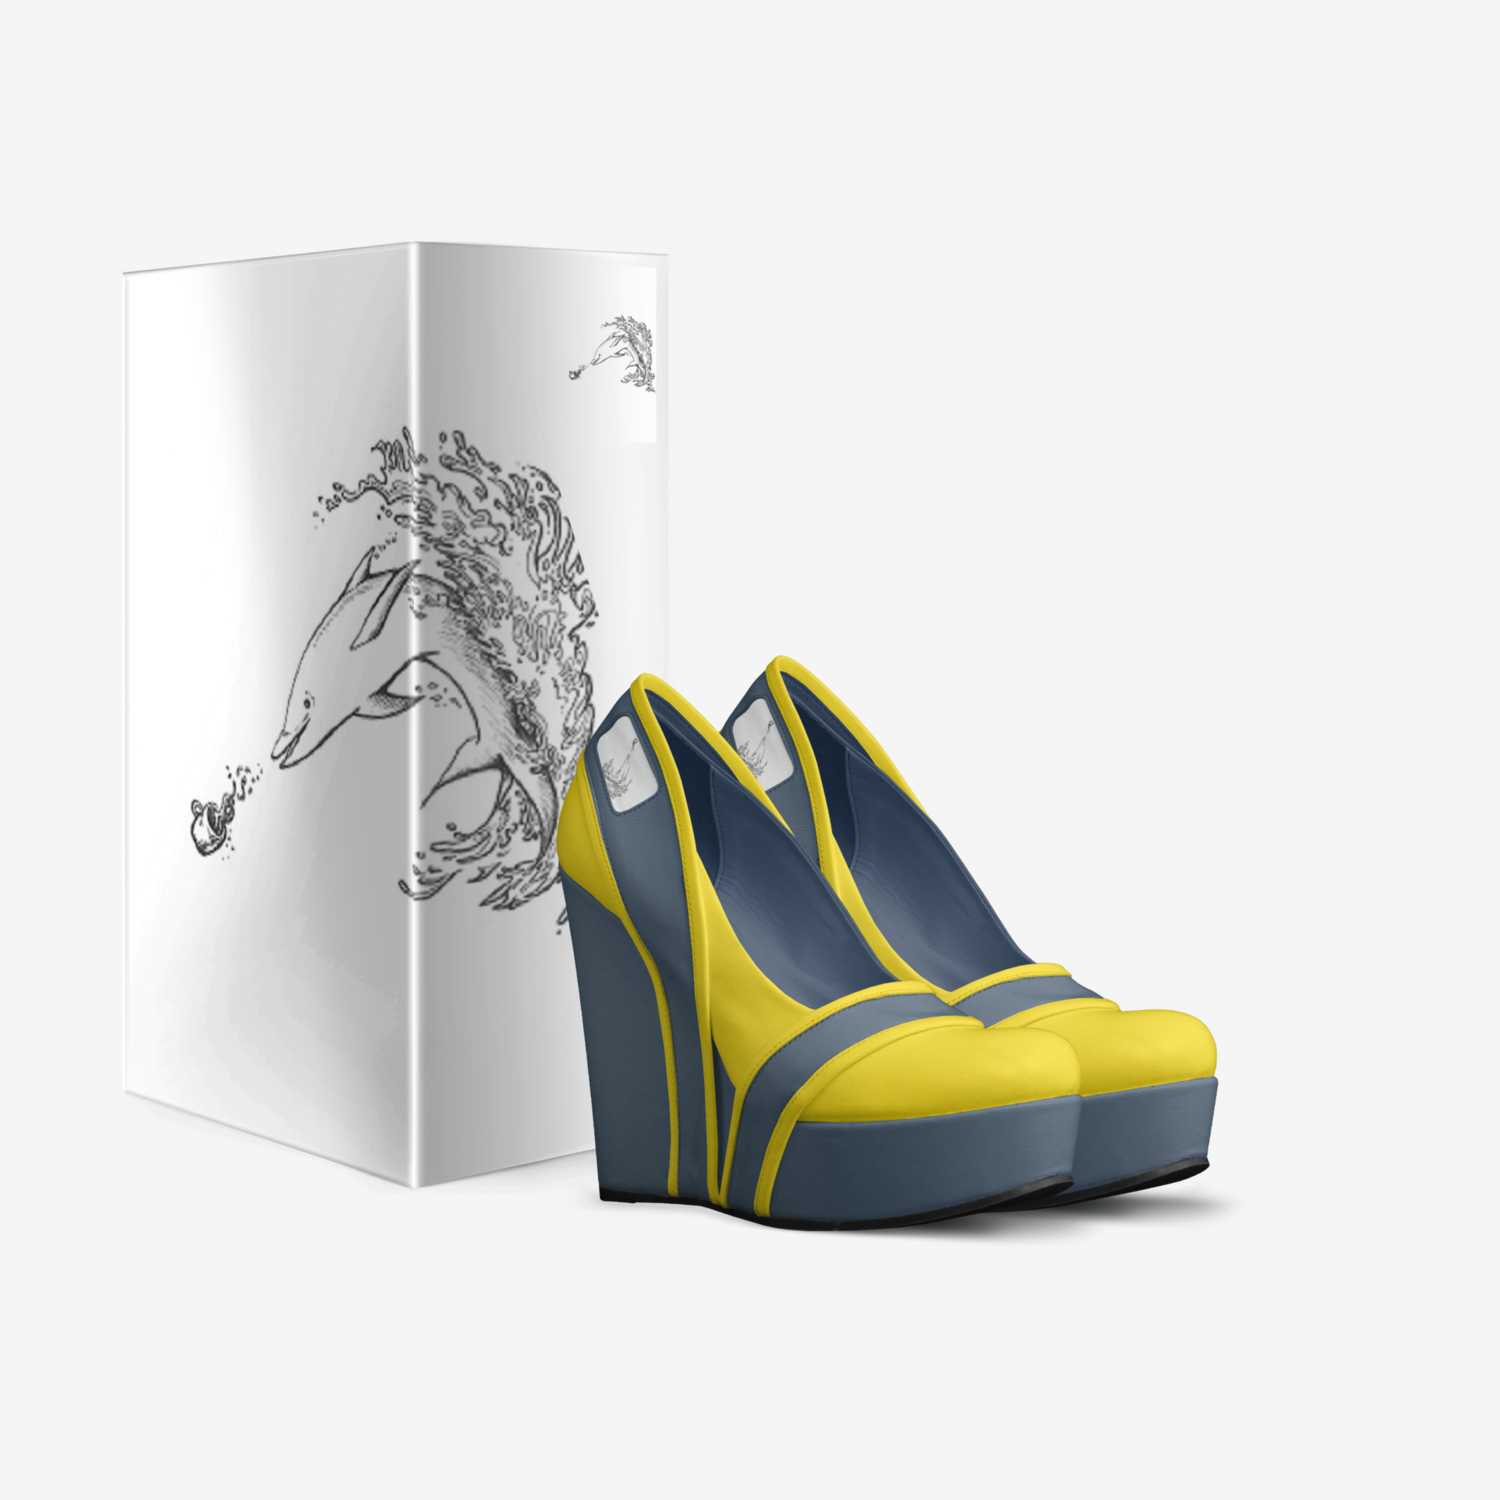 Coffee Dolphin 4 custom made in Italy shoes by John Samano | Box view